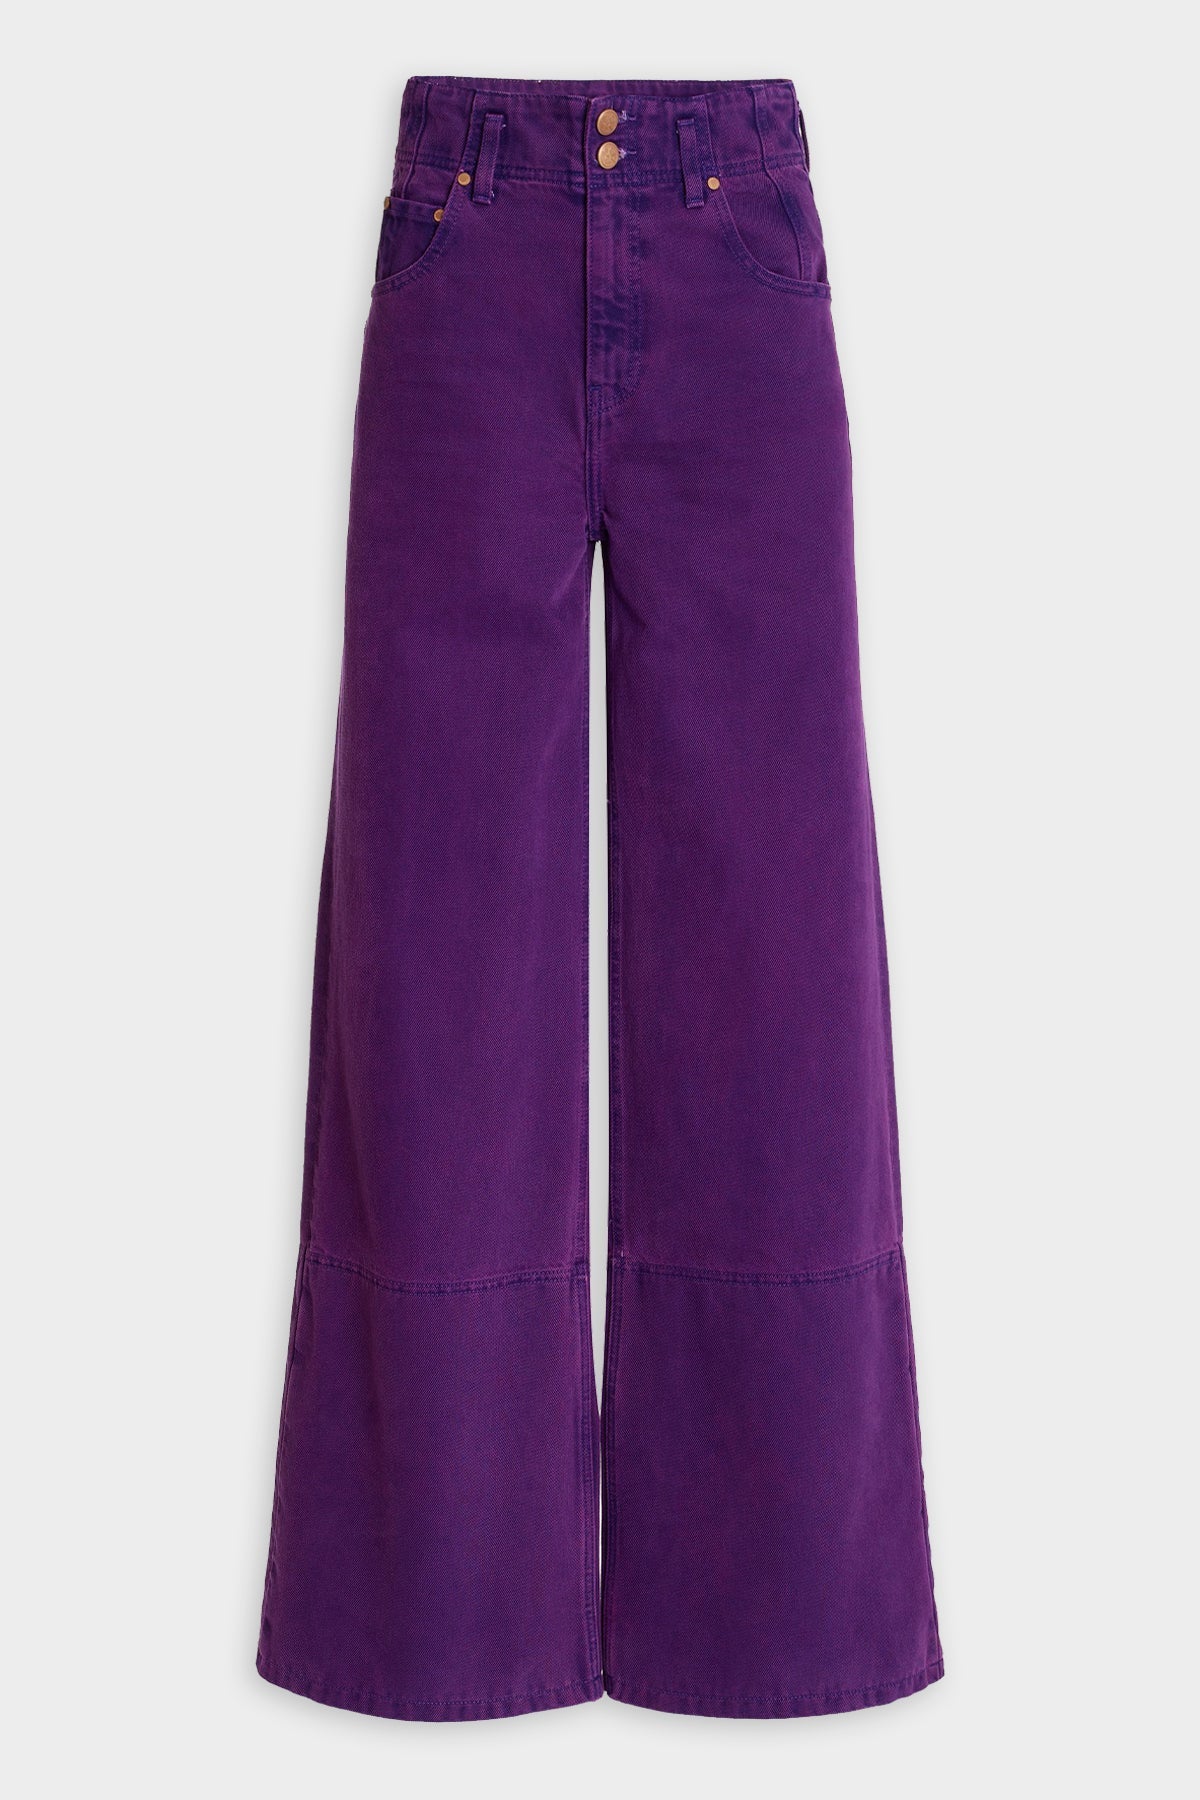 Margot High-Rise Wide-Leg Jeans in Cassis Wash - shop-olivia.com